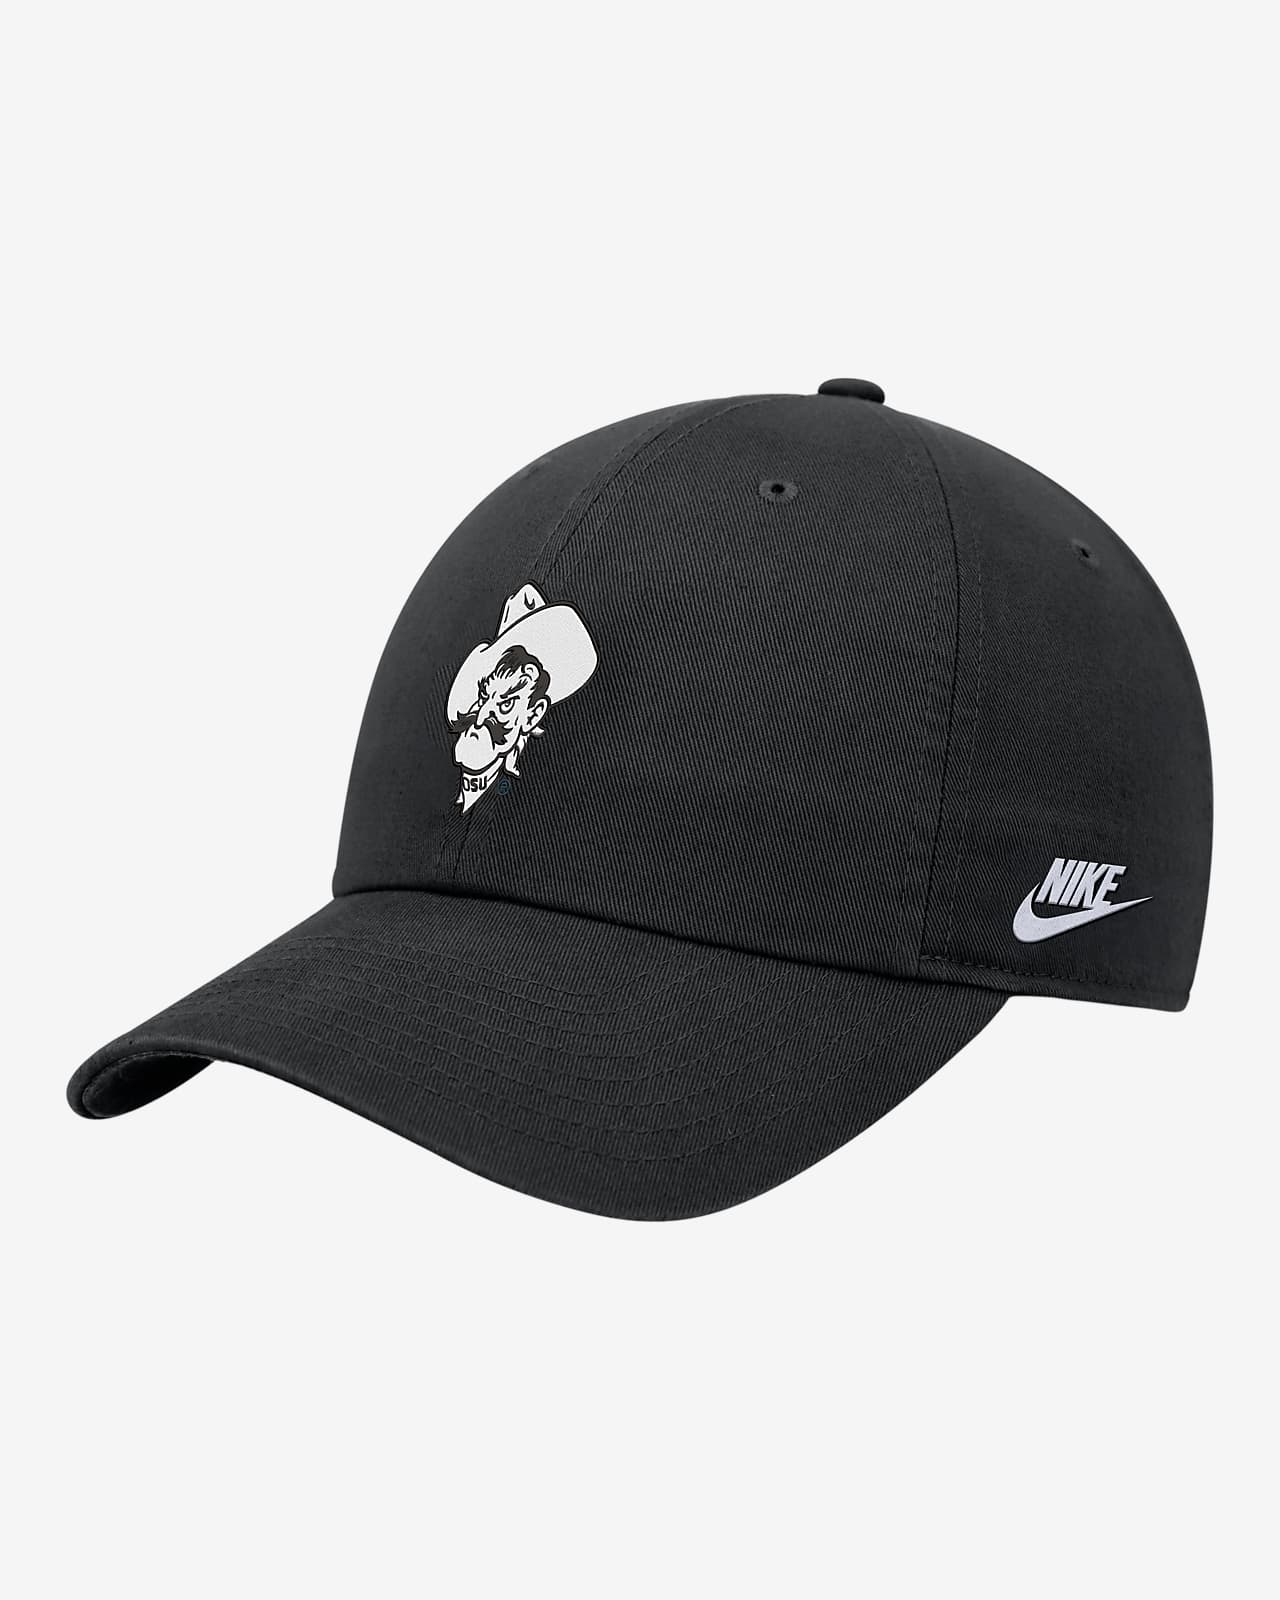 Oklahoma State Nike College Cap